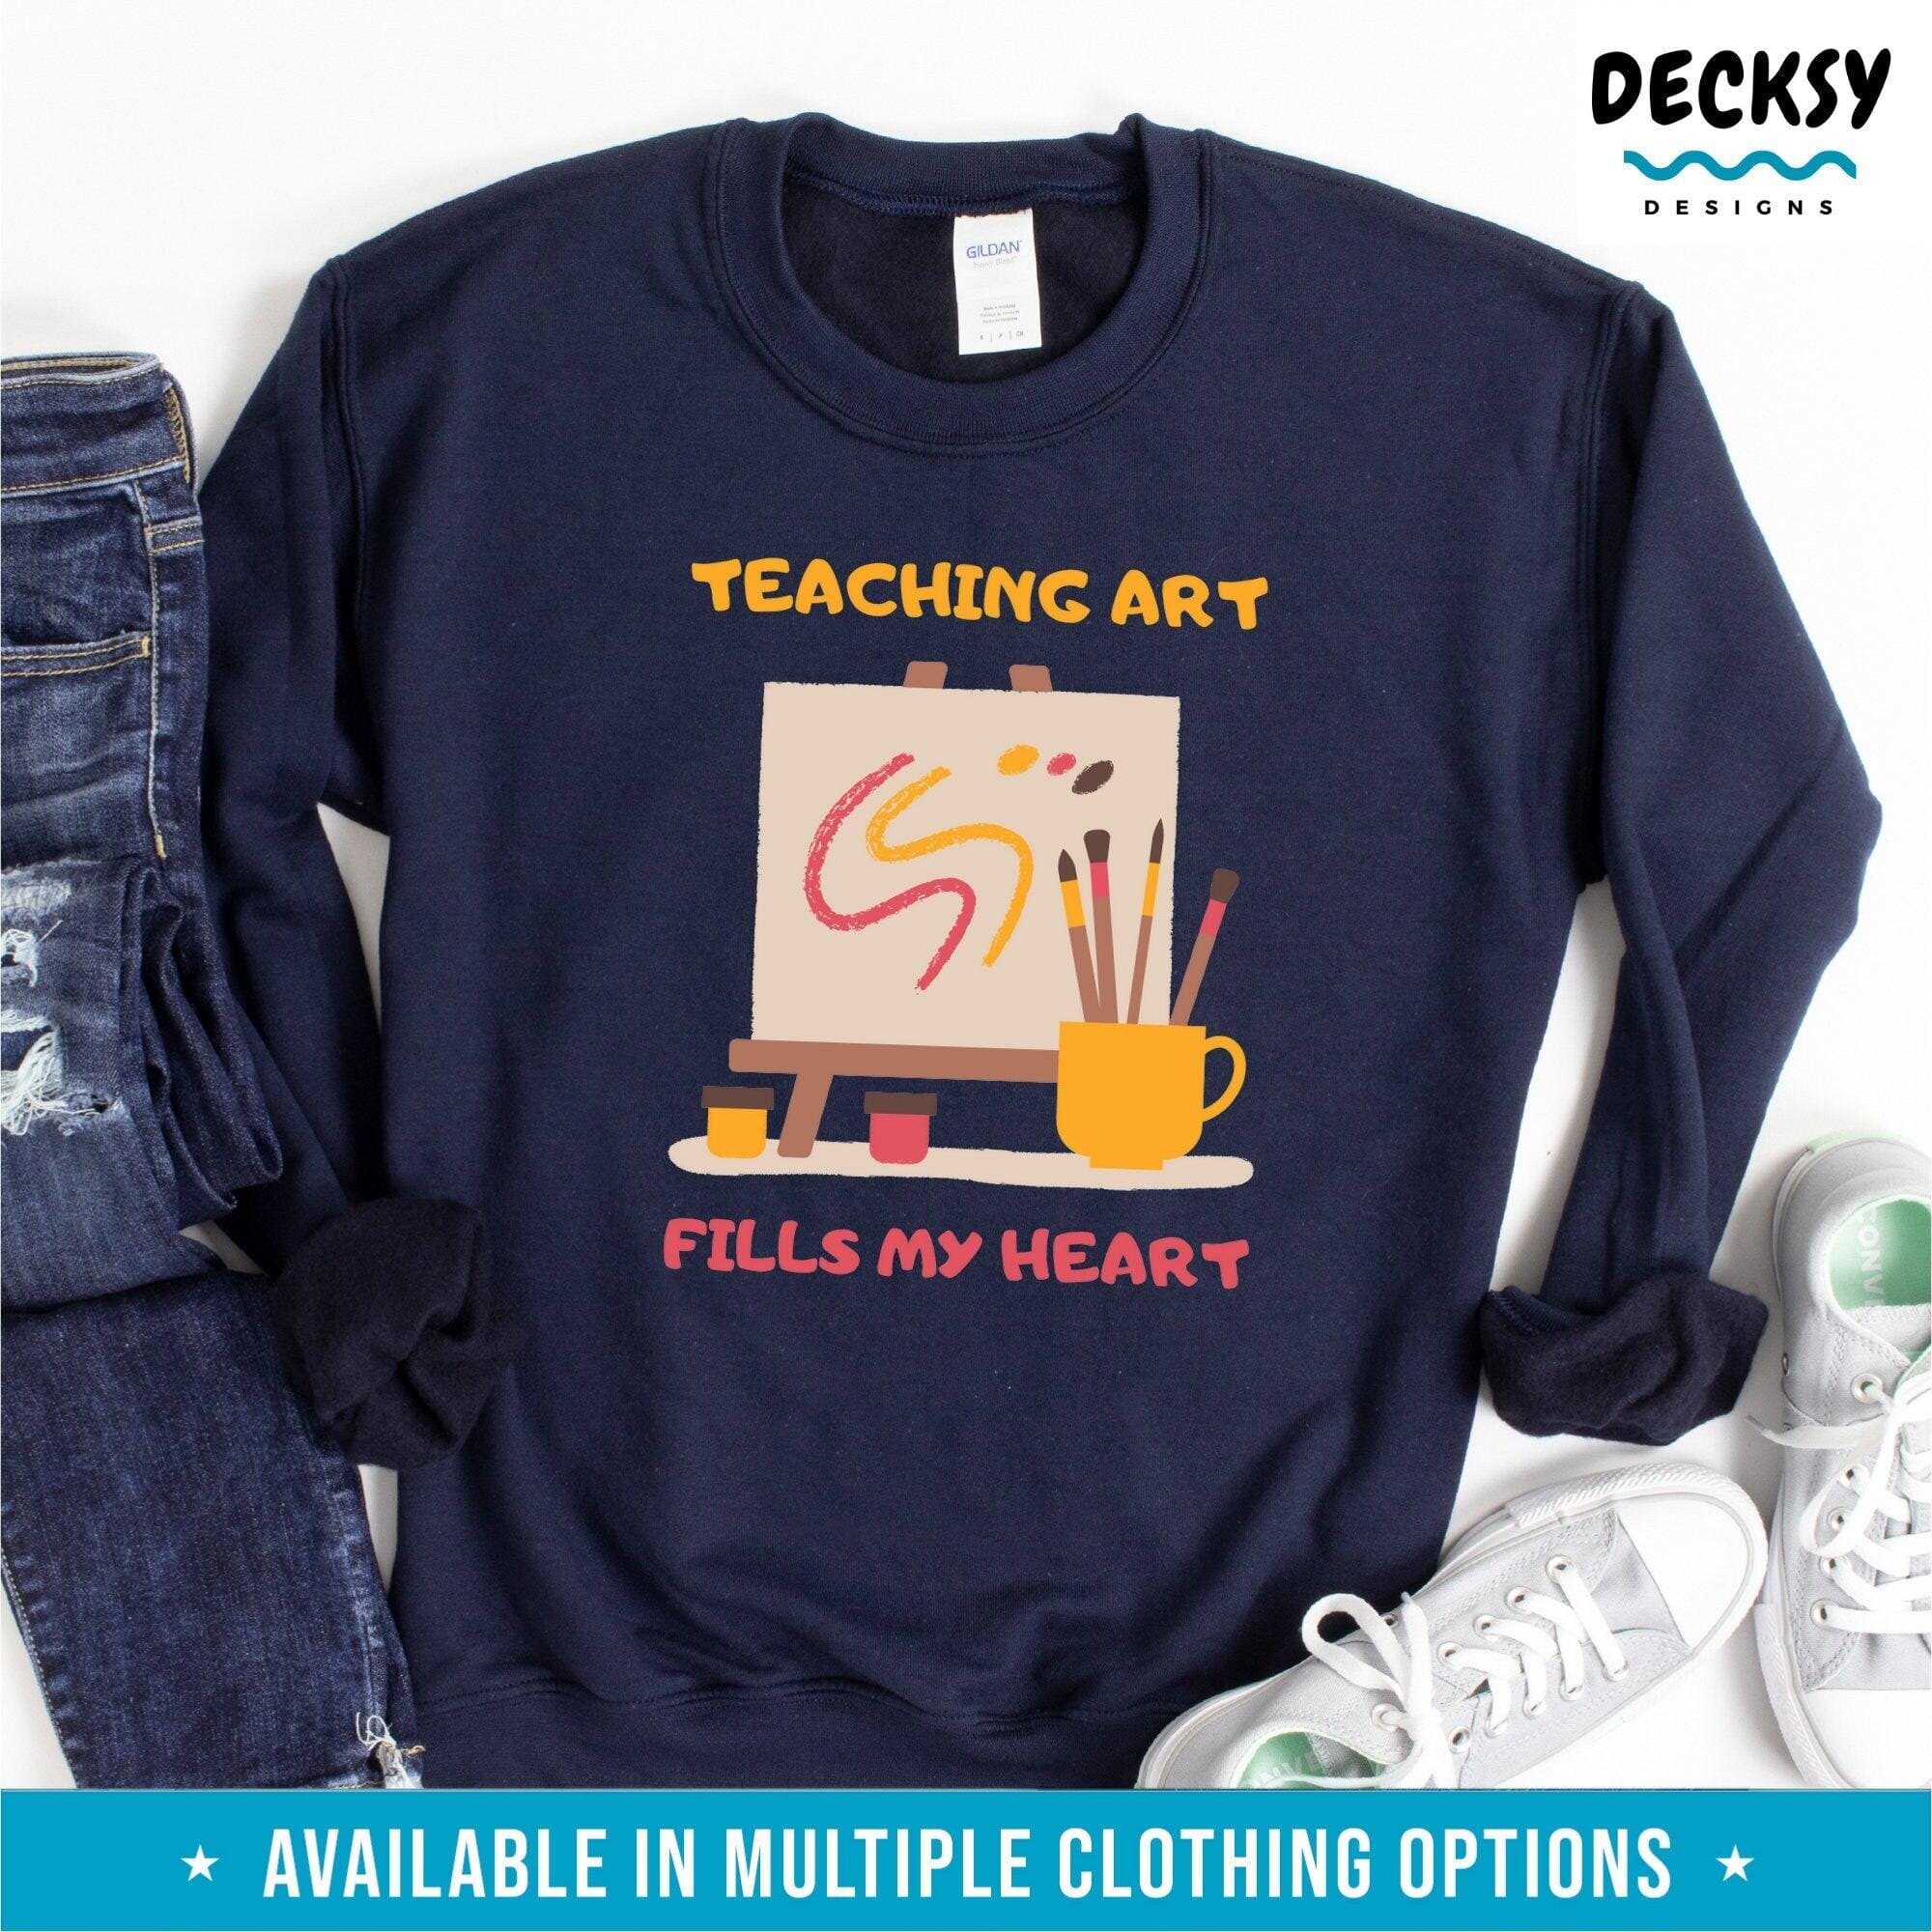 Art Teacher Shirt, Gift For Artist Teacher-Clothing:Gender-Neutral Adult Clothing:Tops & Tees:T-shirts:Graphic Tees-DecksyDesigns